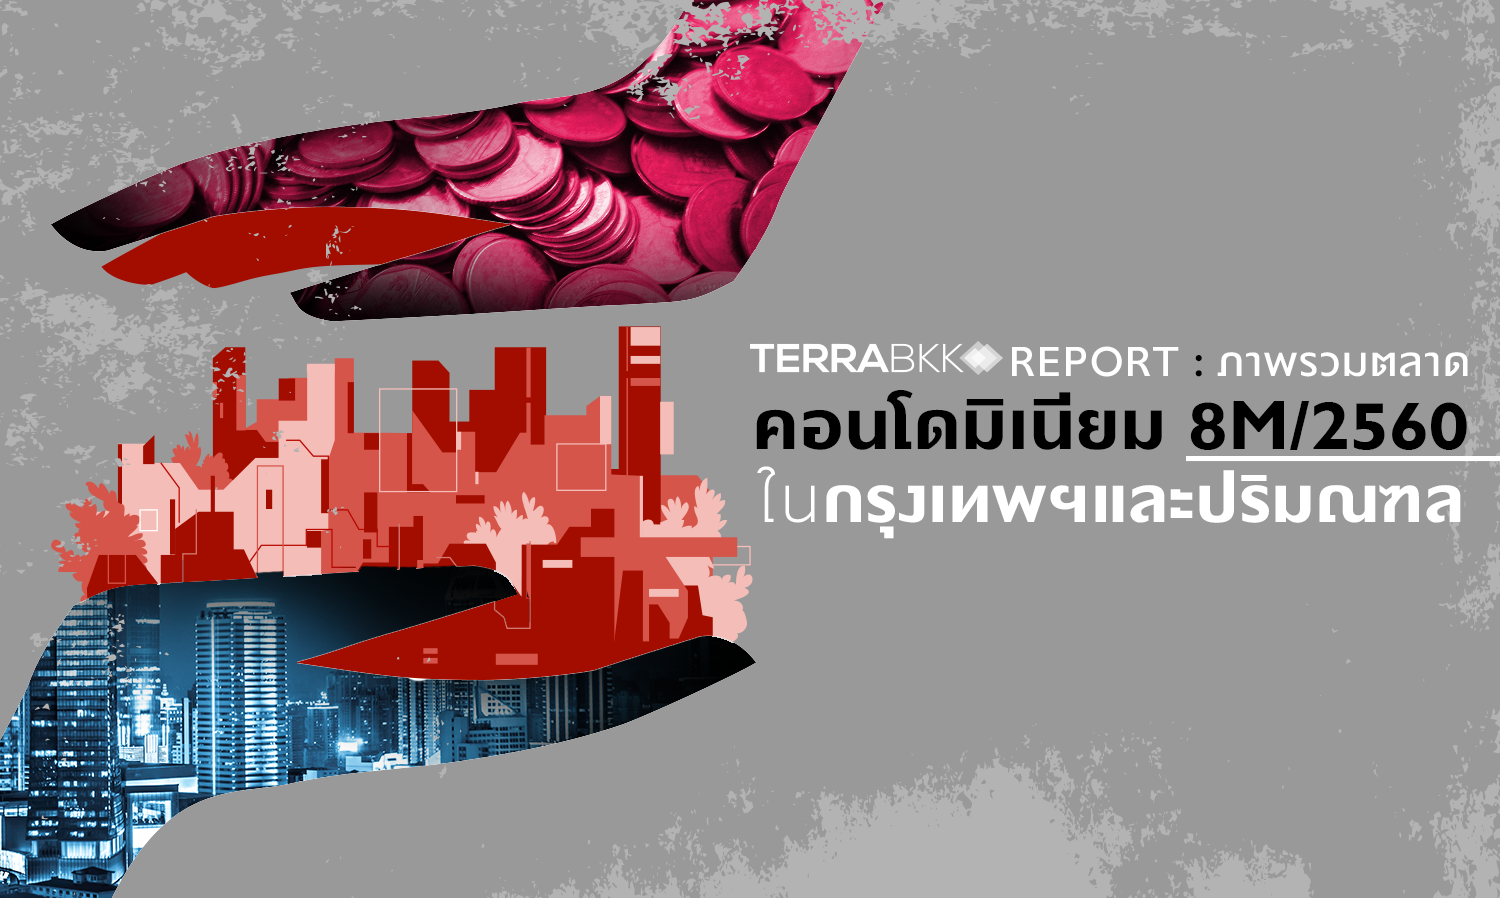 TERRABKK REPORT: ภาพรวมตลาดคอนโดมิเนียม 8M/2560 ในกรุงเทพฯและปริมณฑล